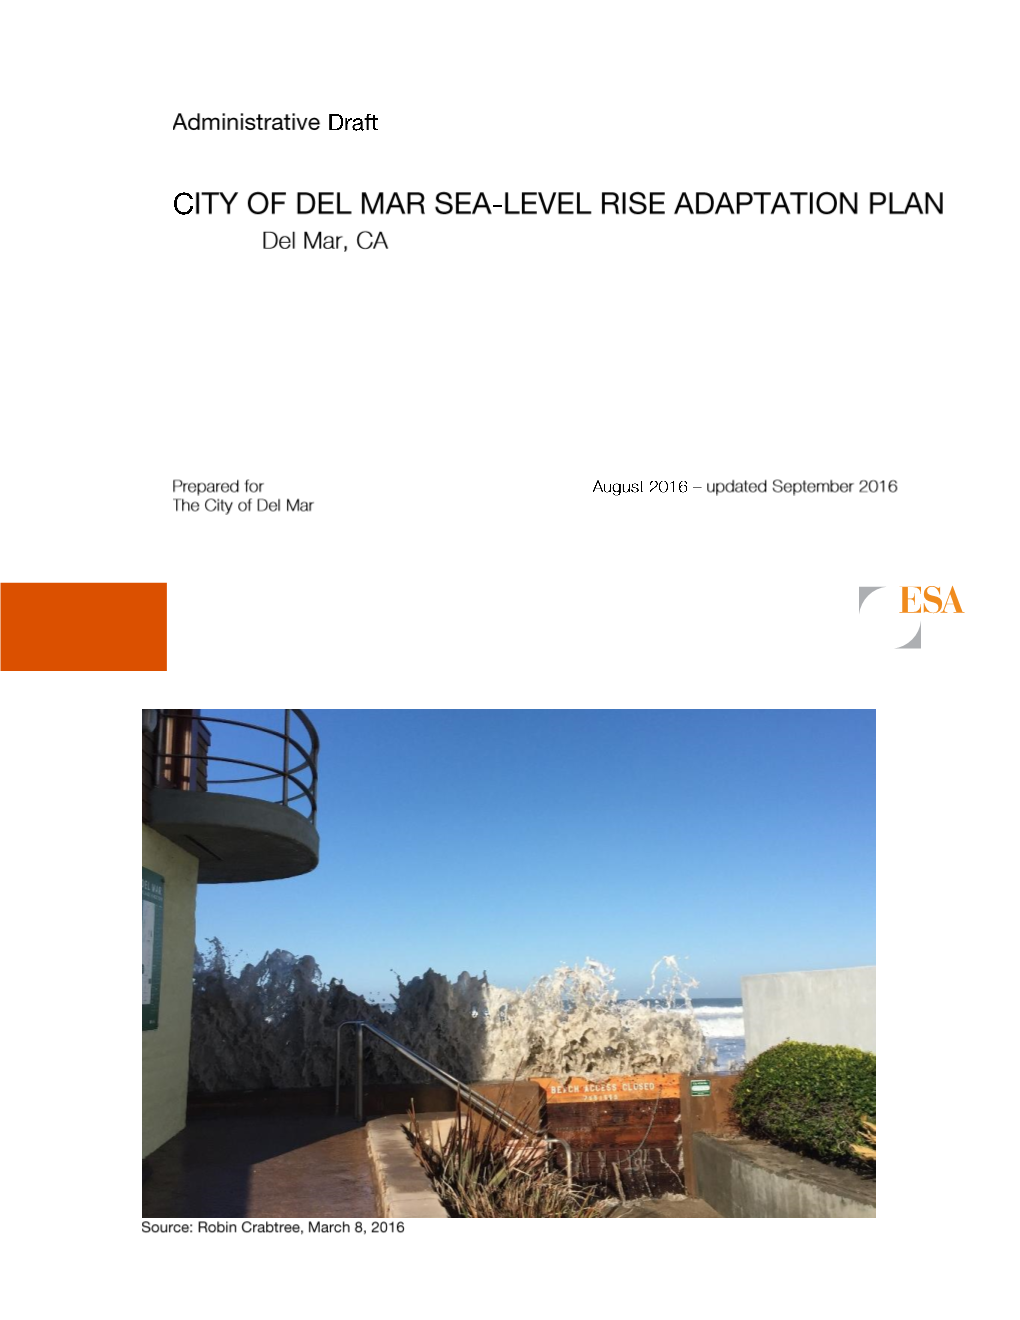 City of Del Mar Sea-Level Rise Adaptation Plan